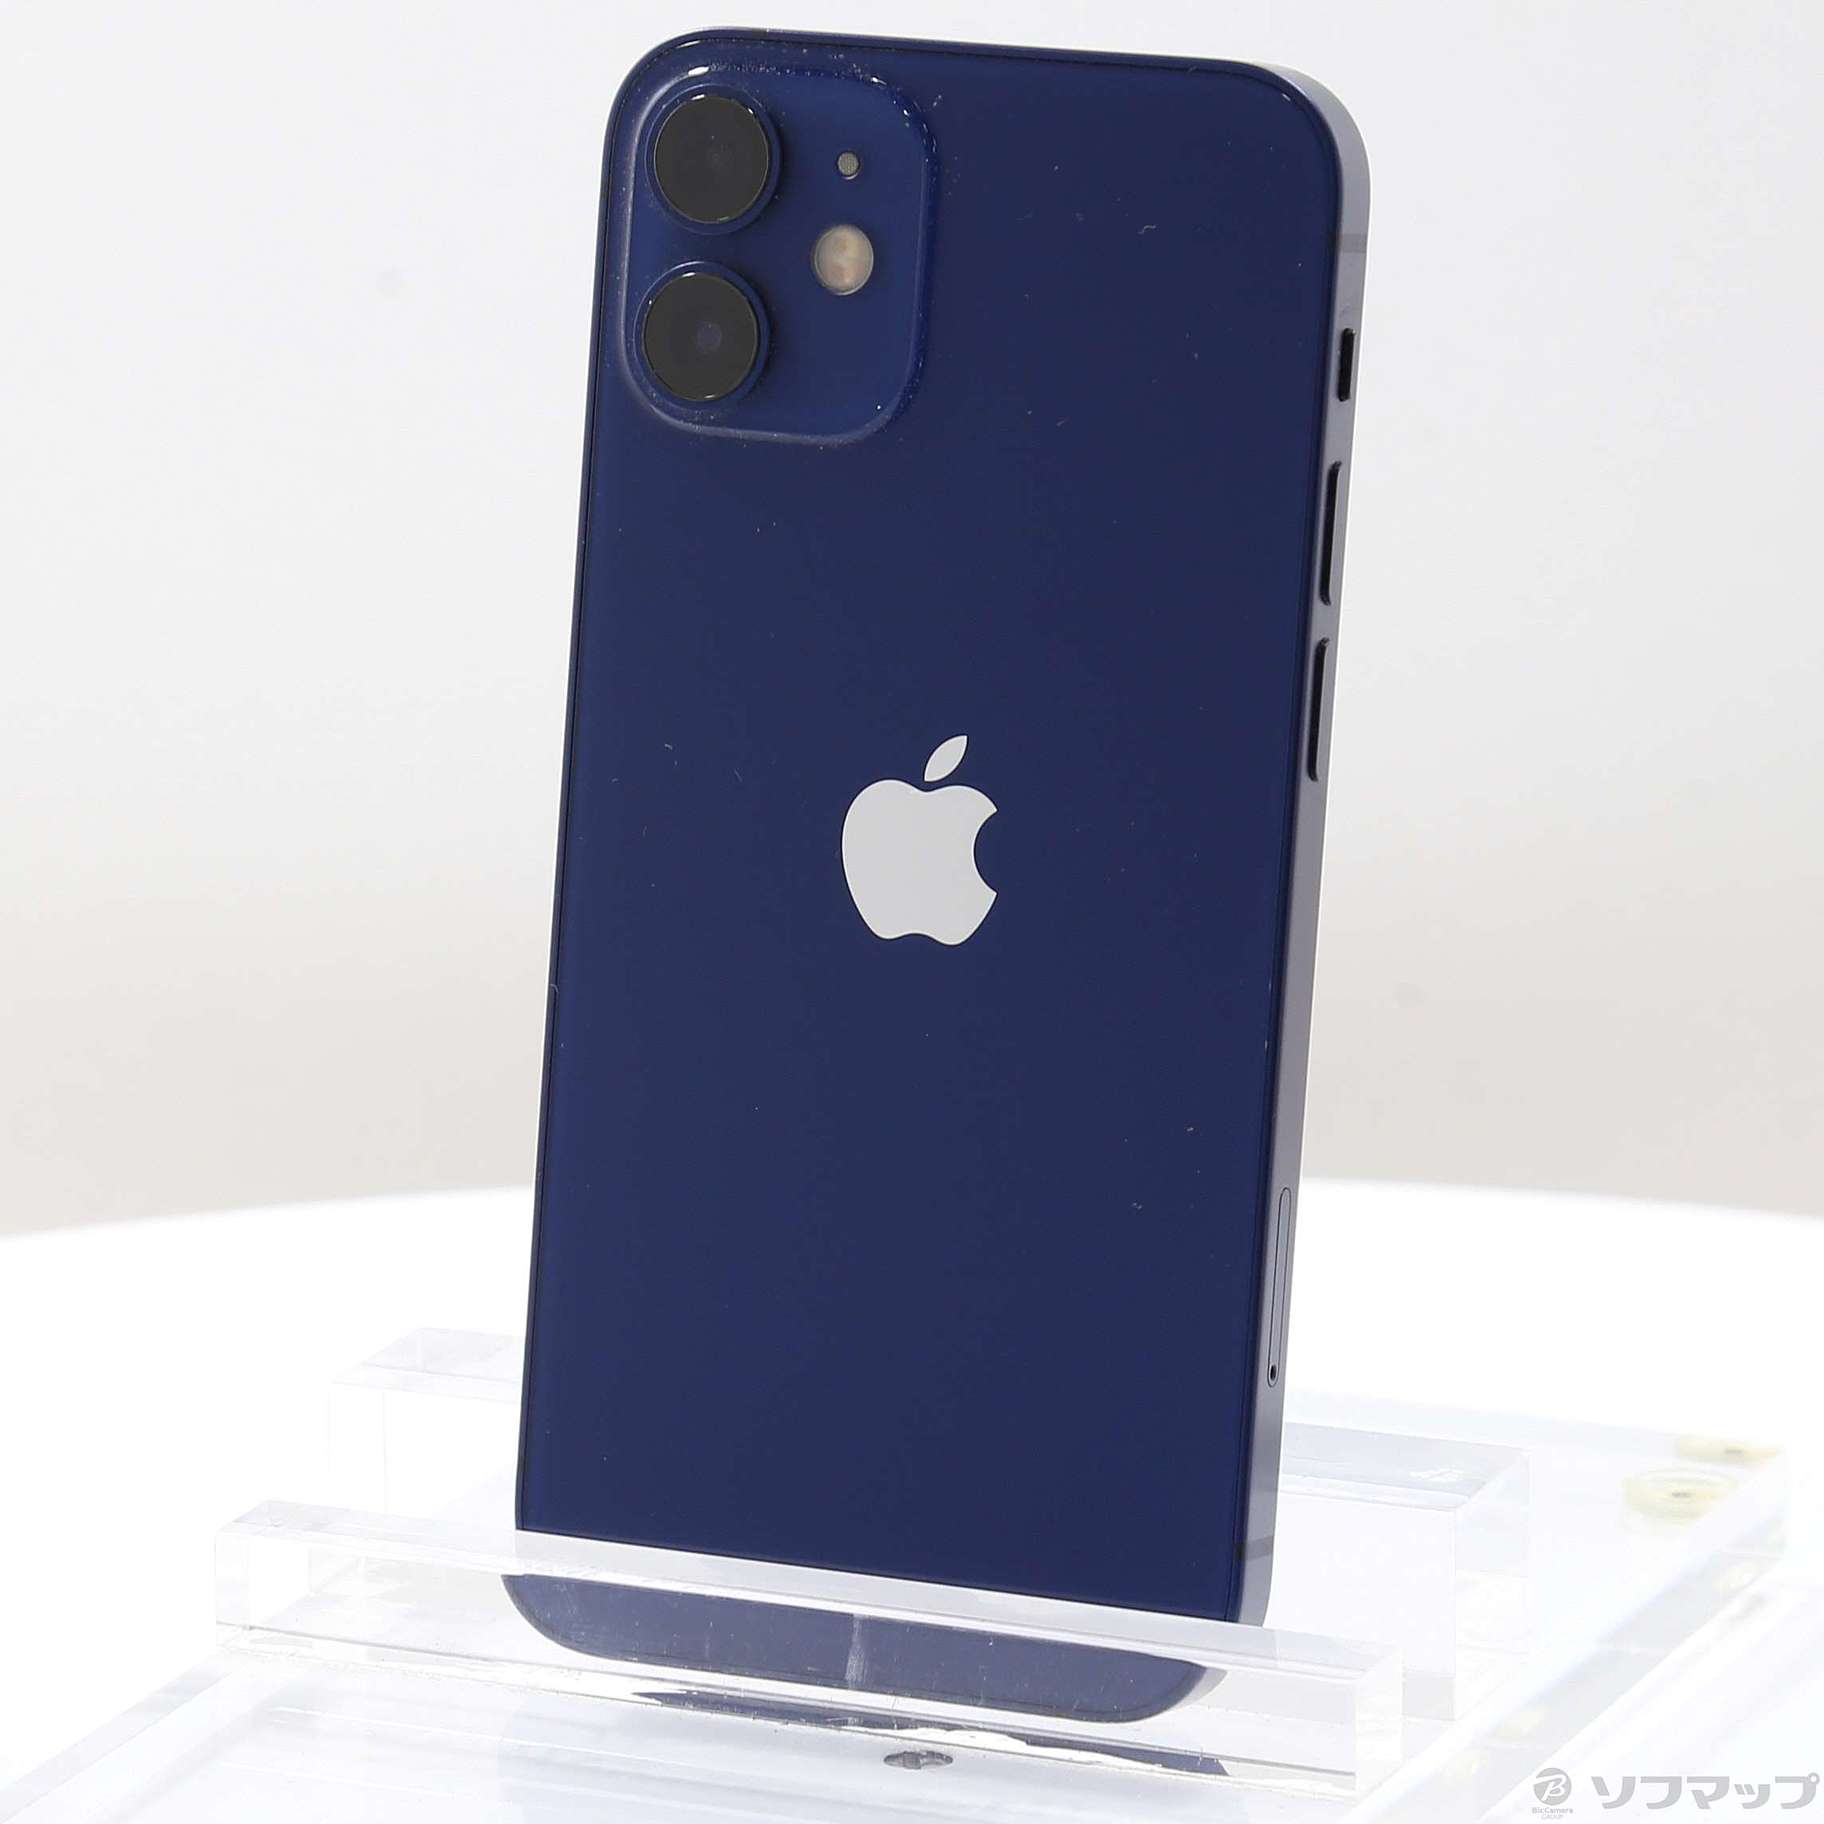 iPhone 12 mini 64GB SIMフリー [ブルー] 中古(白ロム)価格比較 - 価格.com